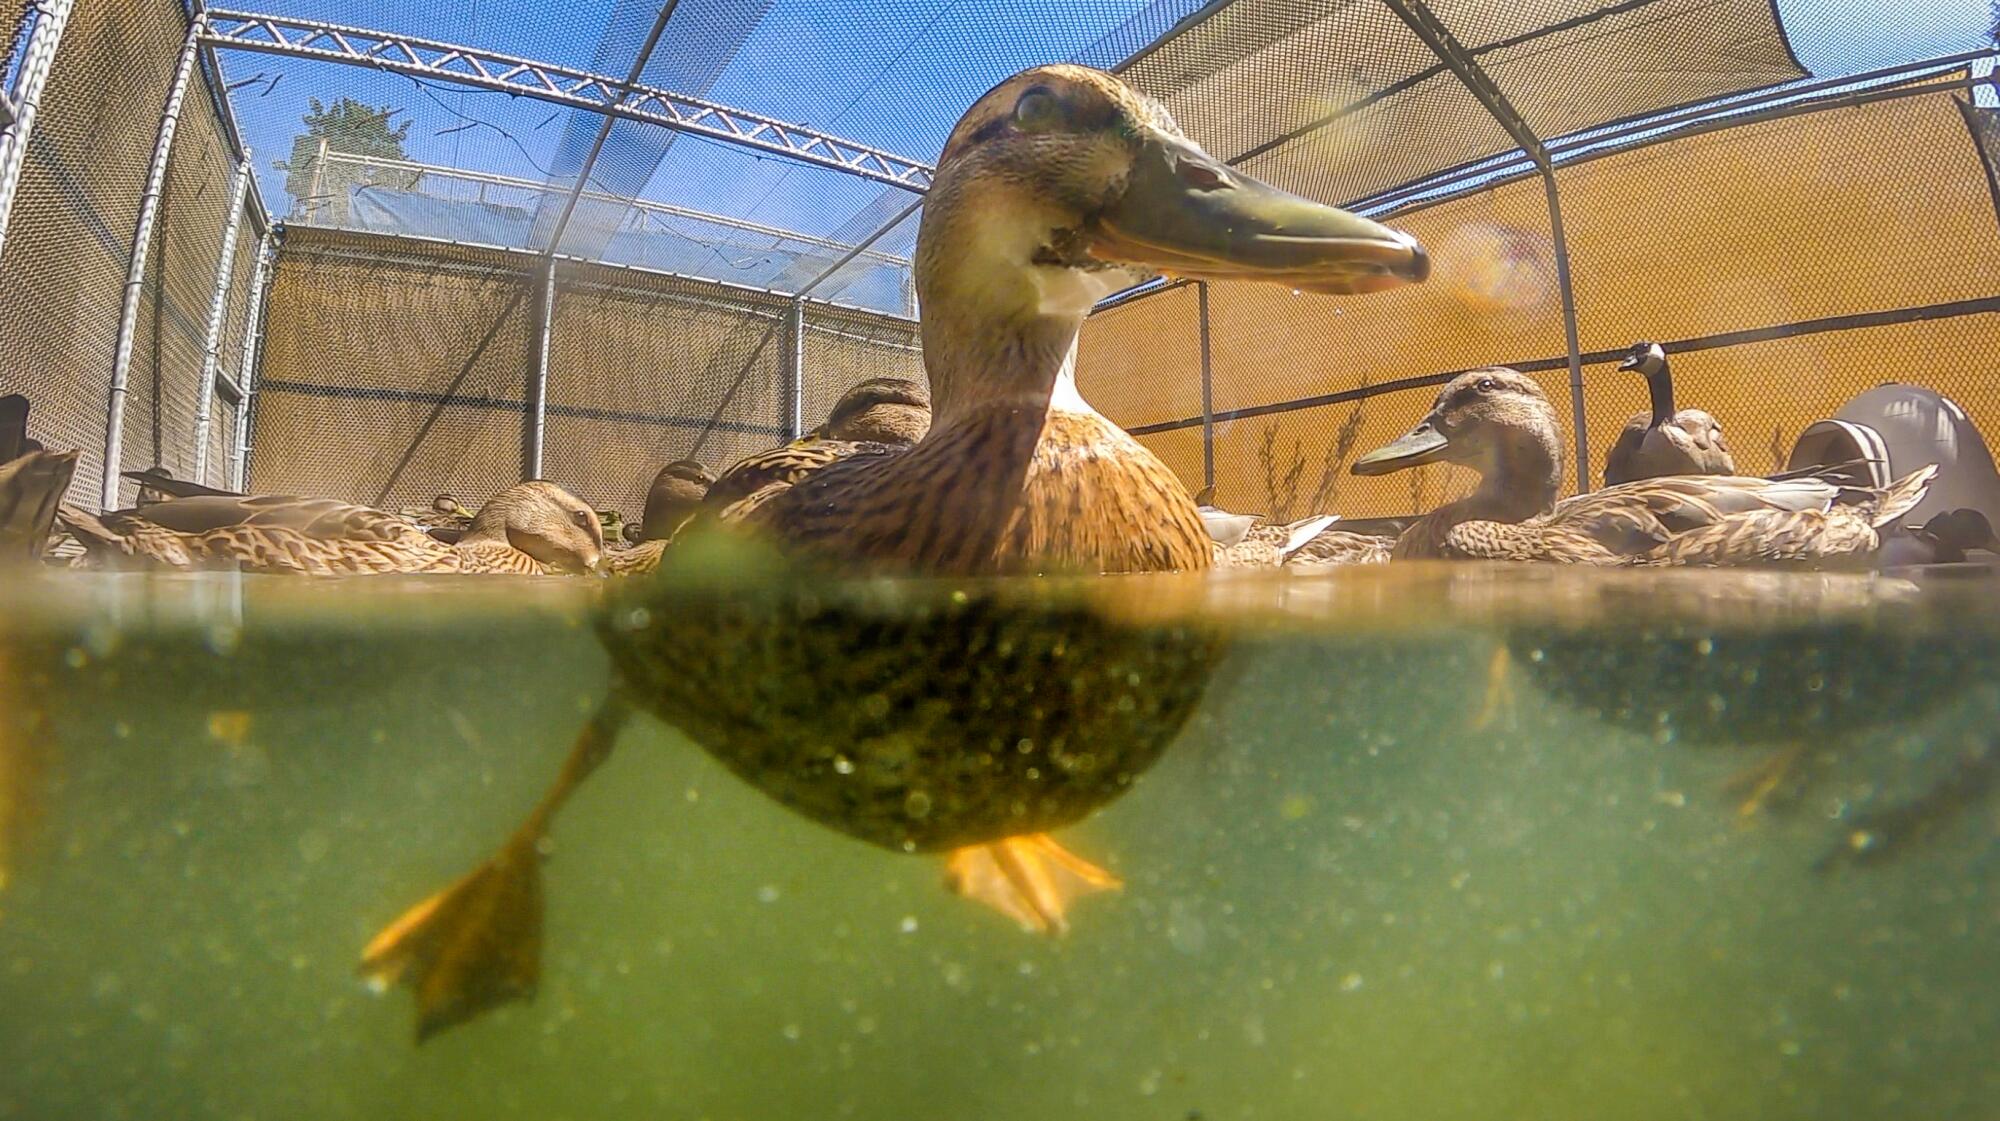 A half-underwater view of ducks shows paddling duck feet.